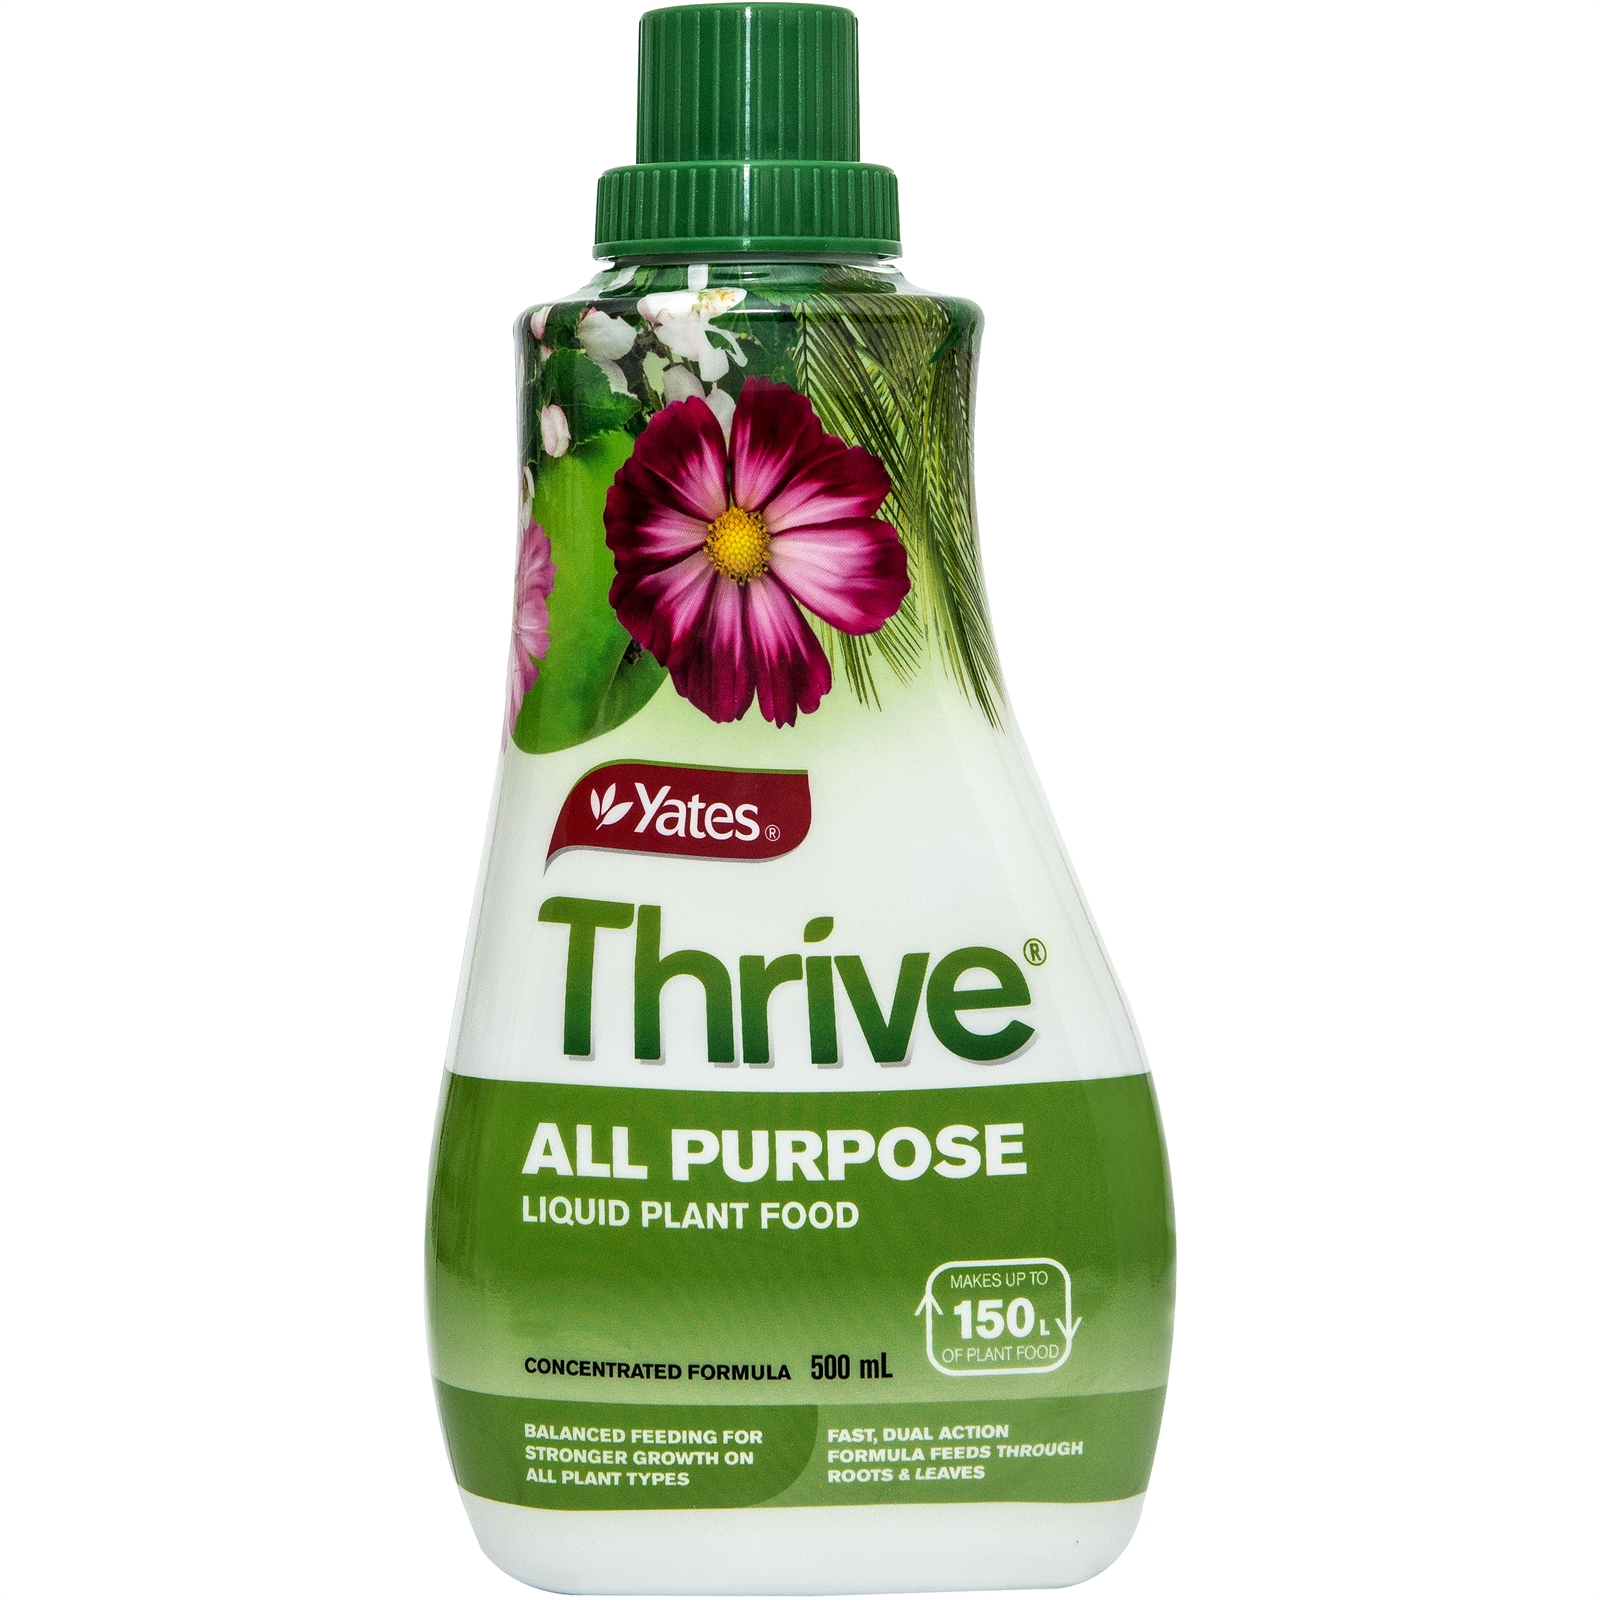 Yates 500ml Thrive All Purpose Liquid Plant Food